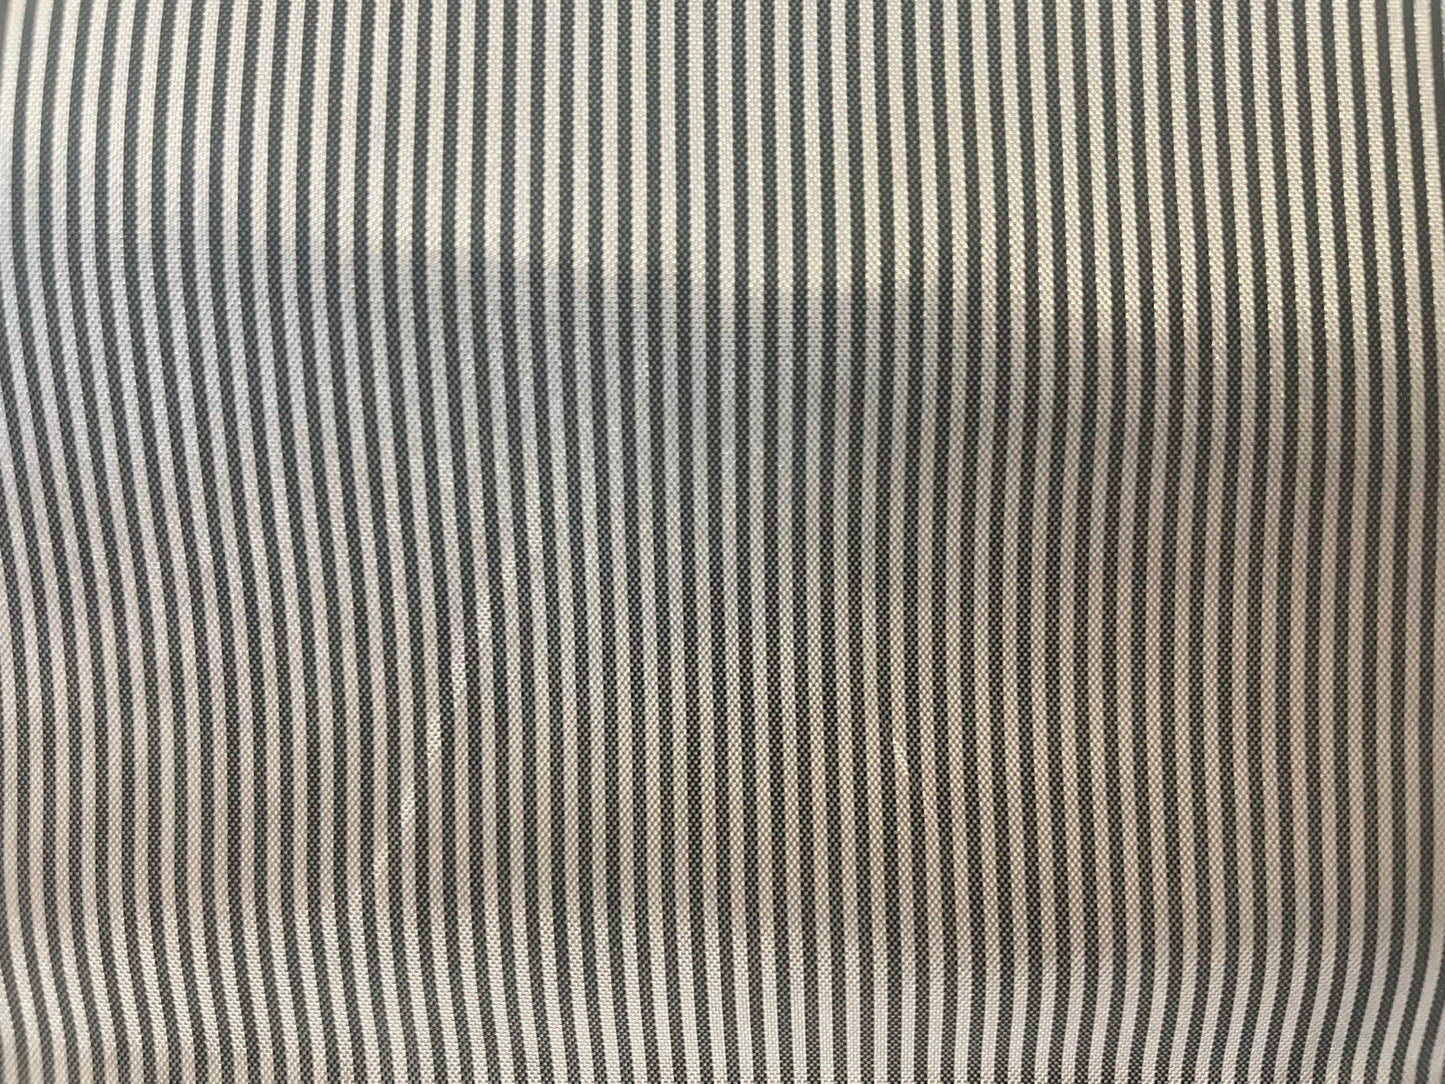 Stripe Print Poly lining - Grey / White